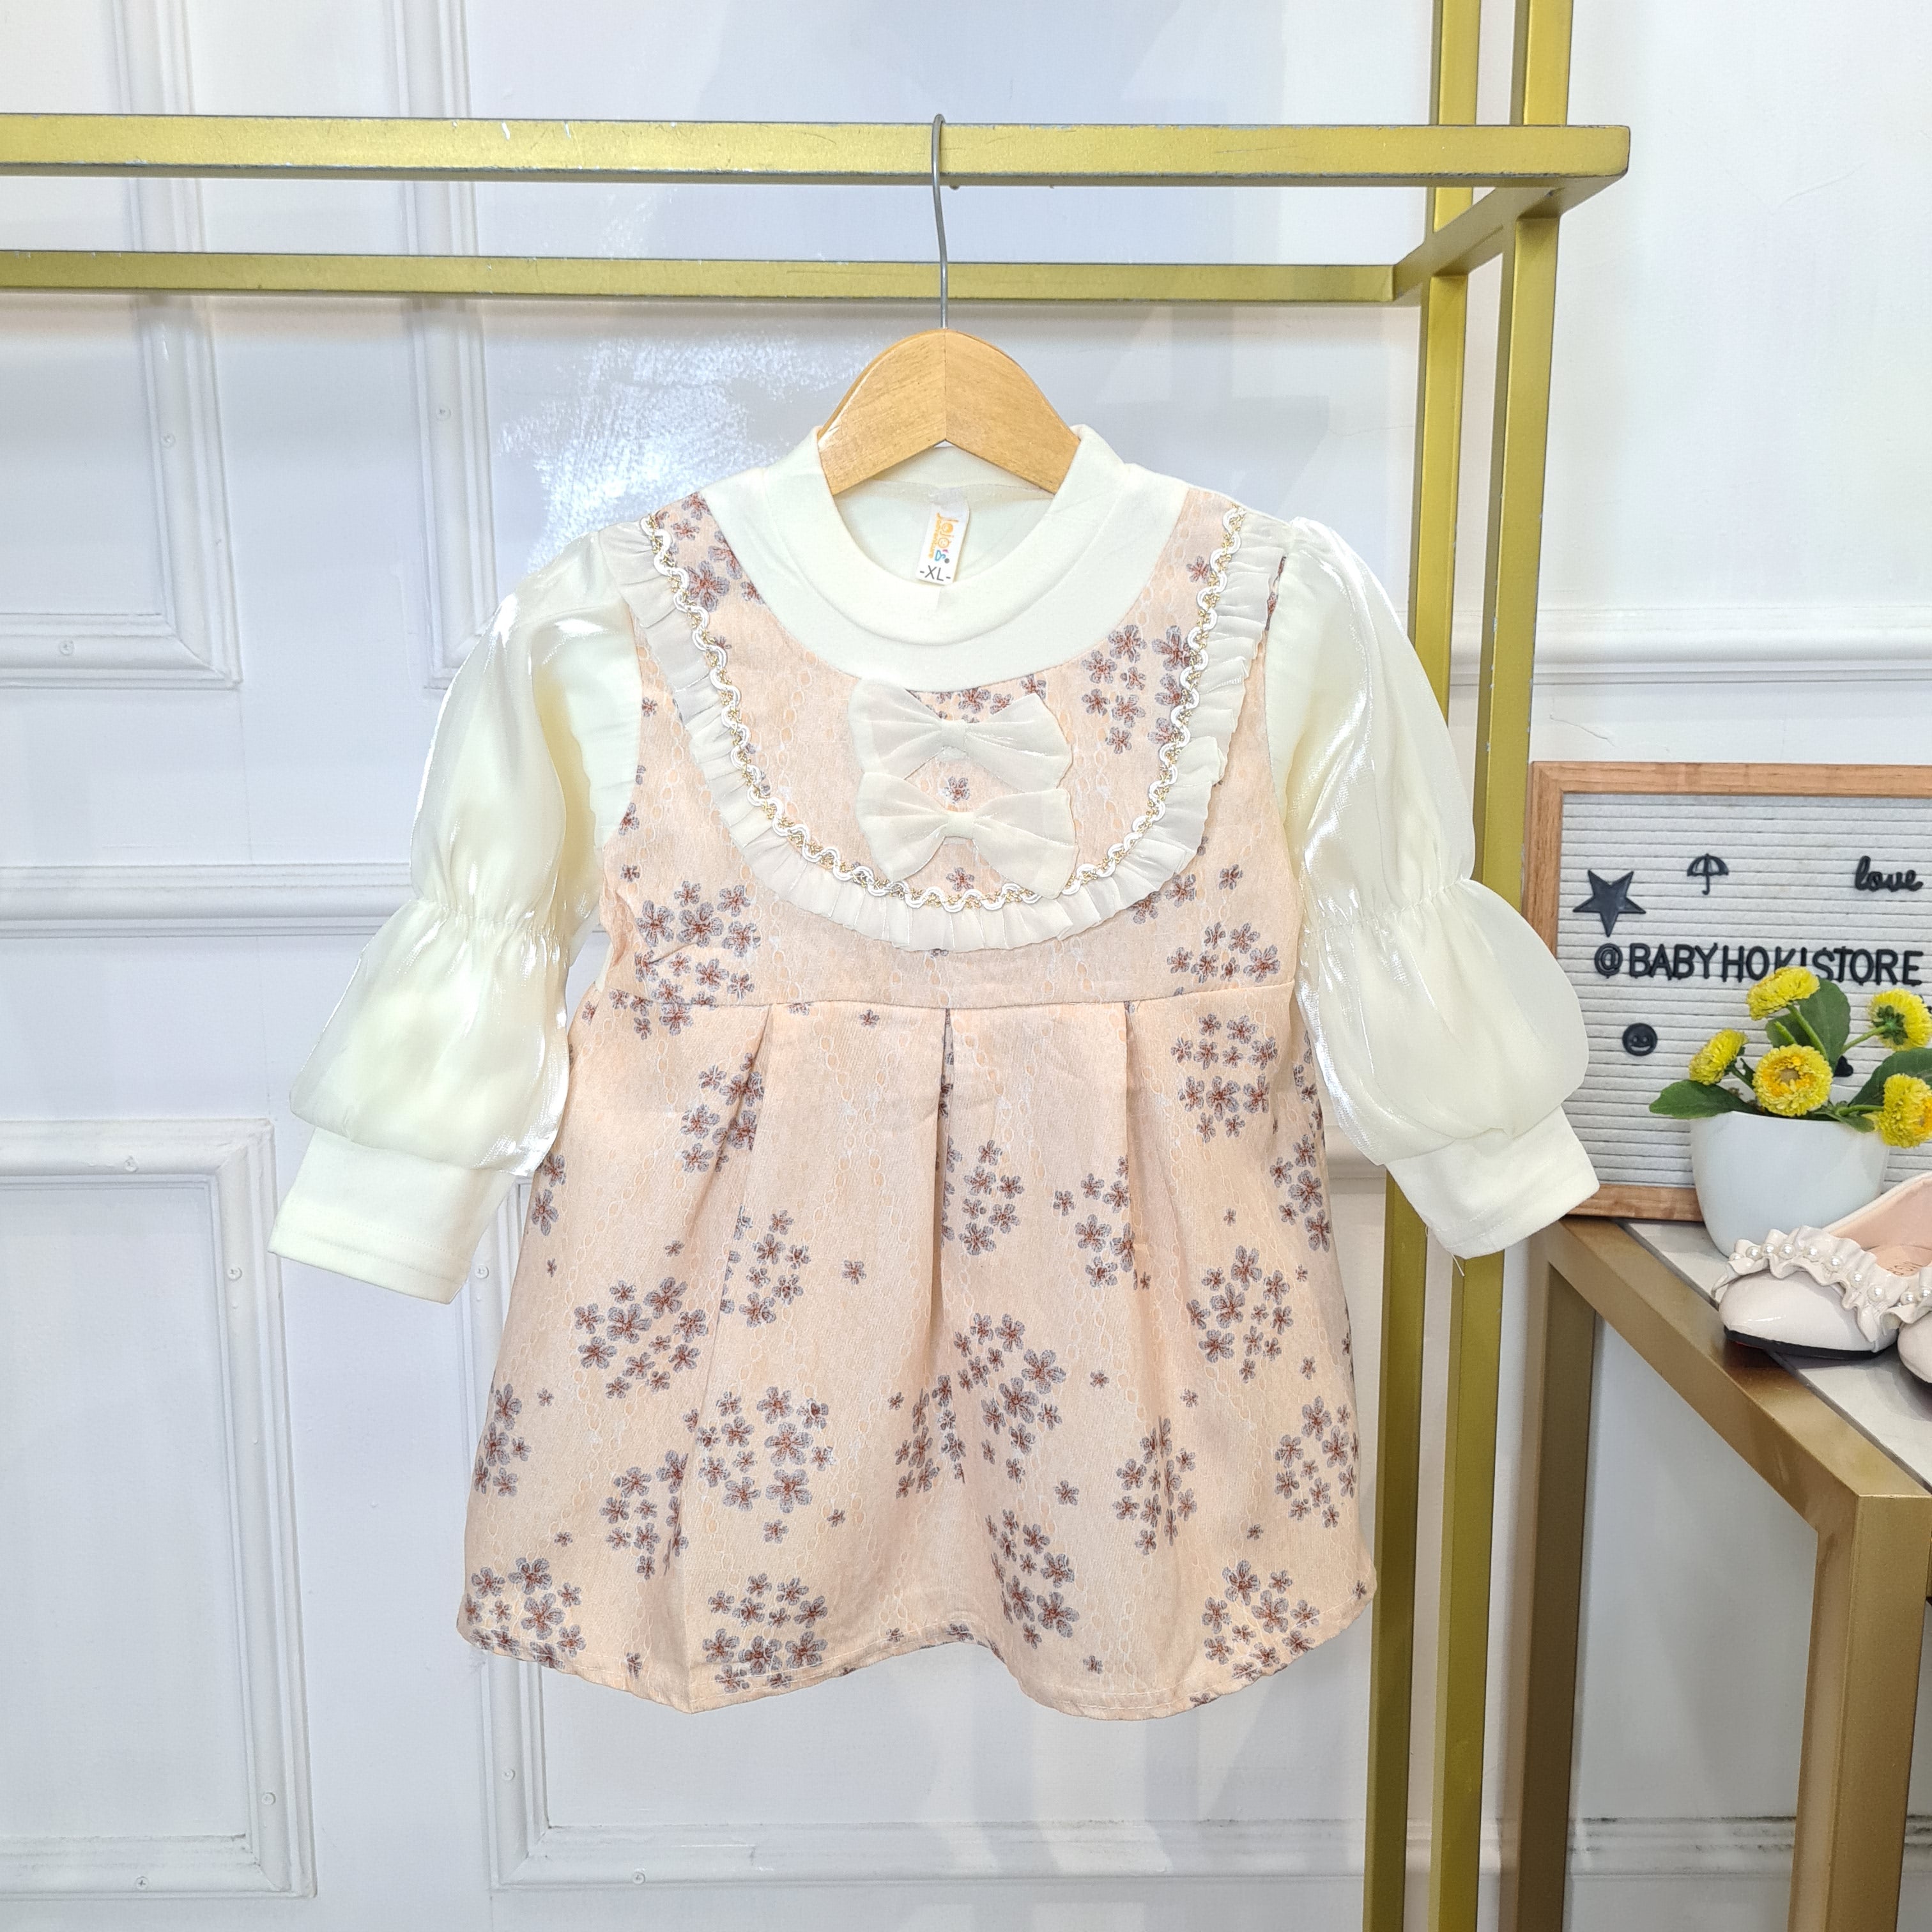 [340426-V1] - Baju Mini Dress Lengan Panjang Fashion Import Anak Perempuan - Motif Ribbon Flower